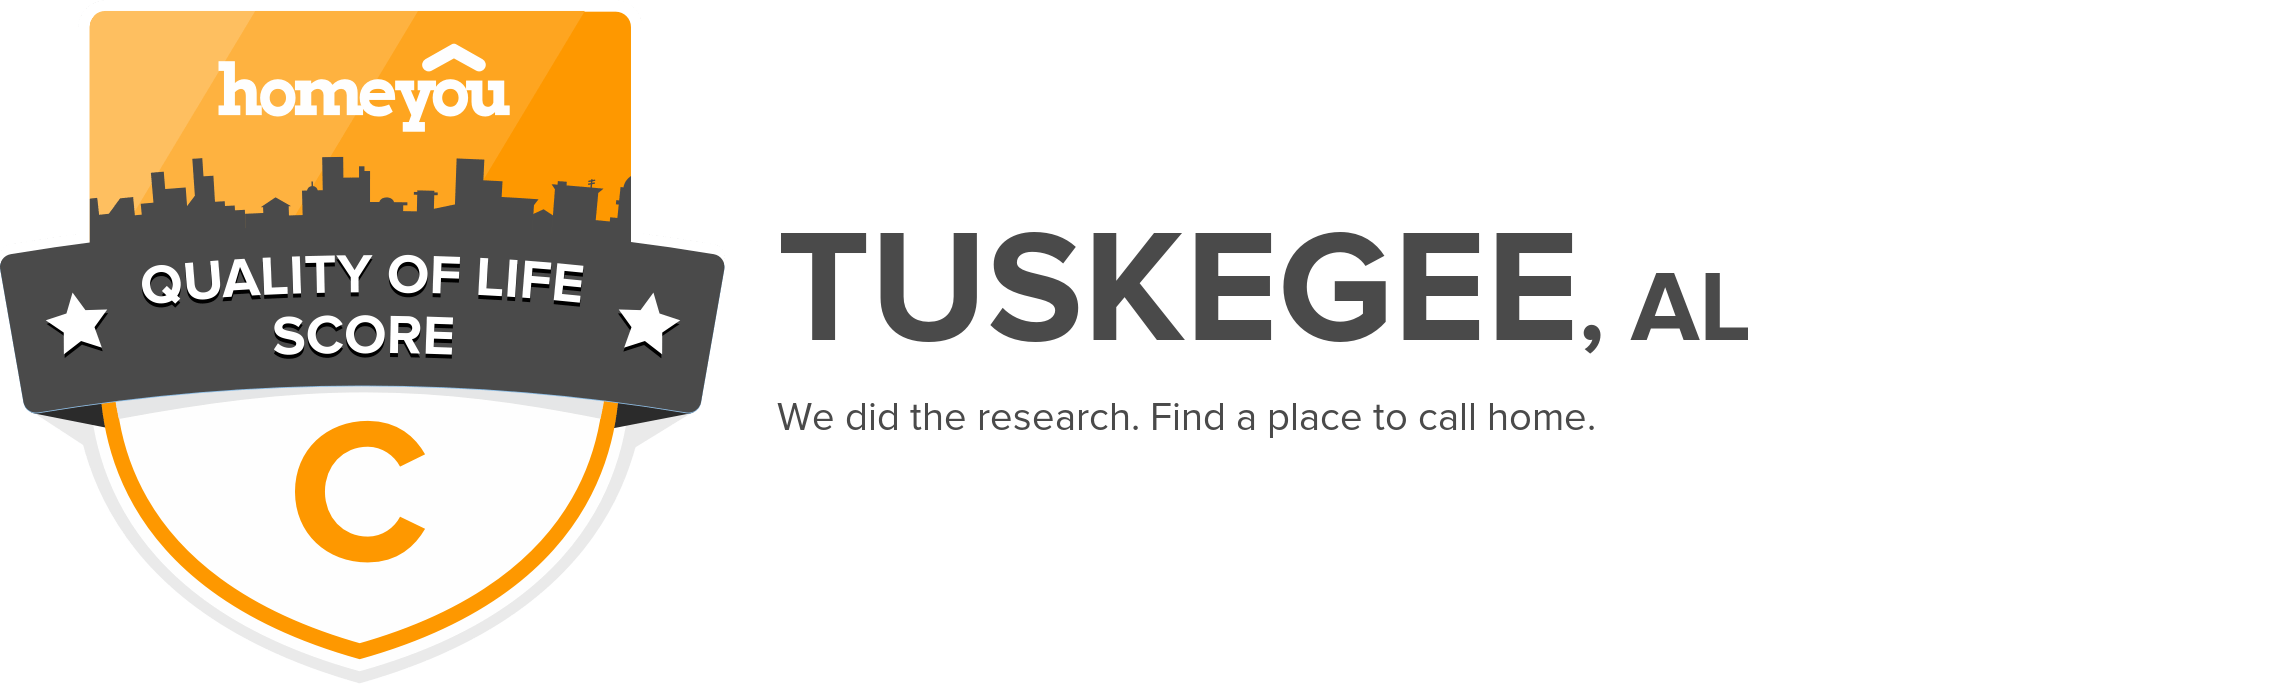 Tuskegee, AL